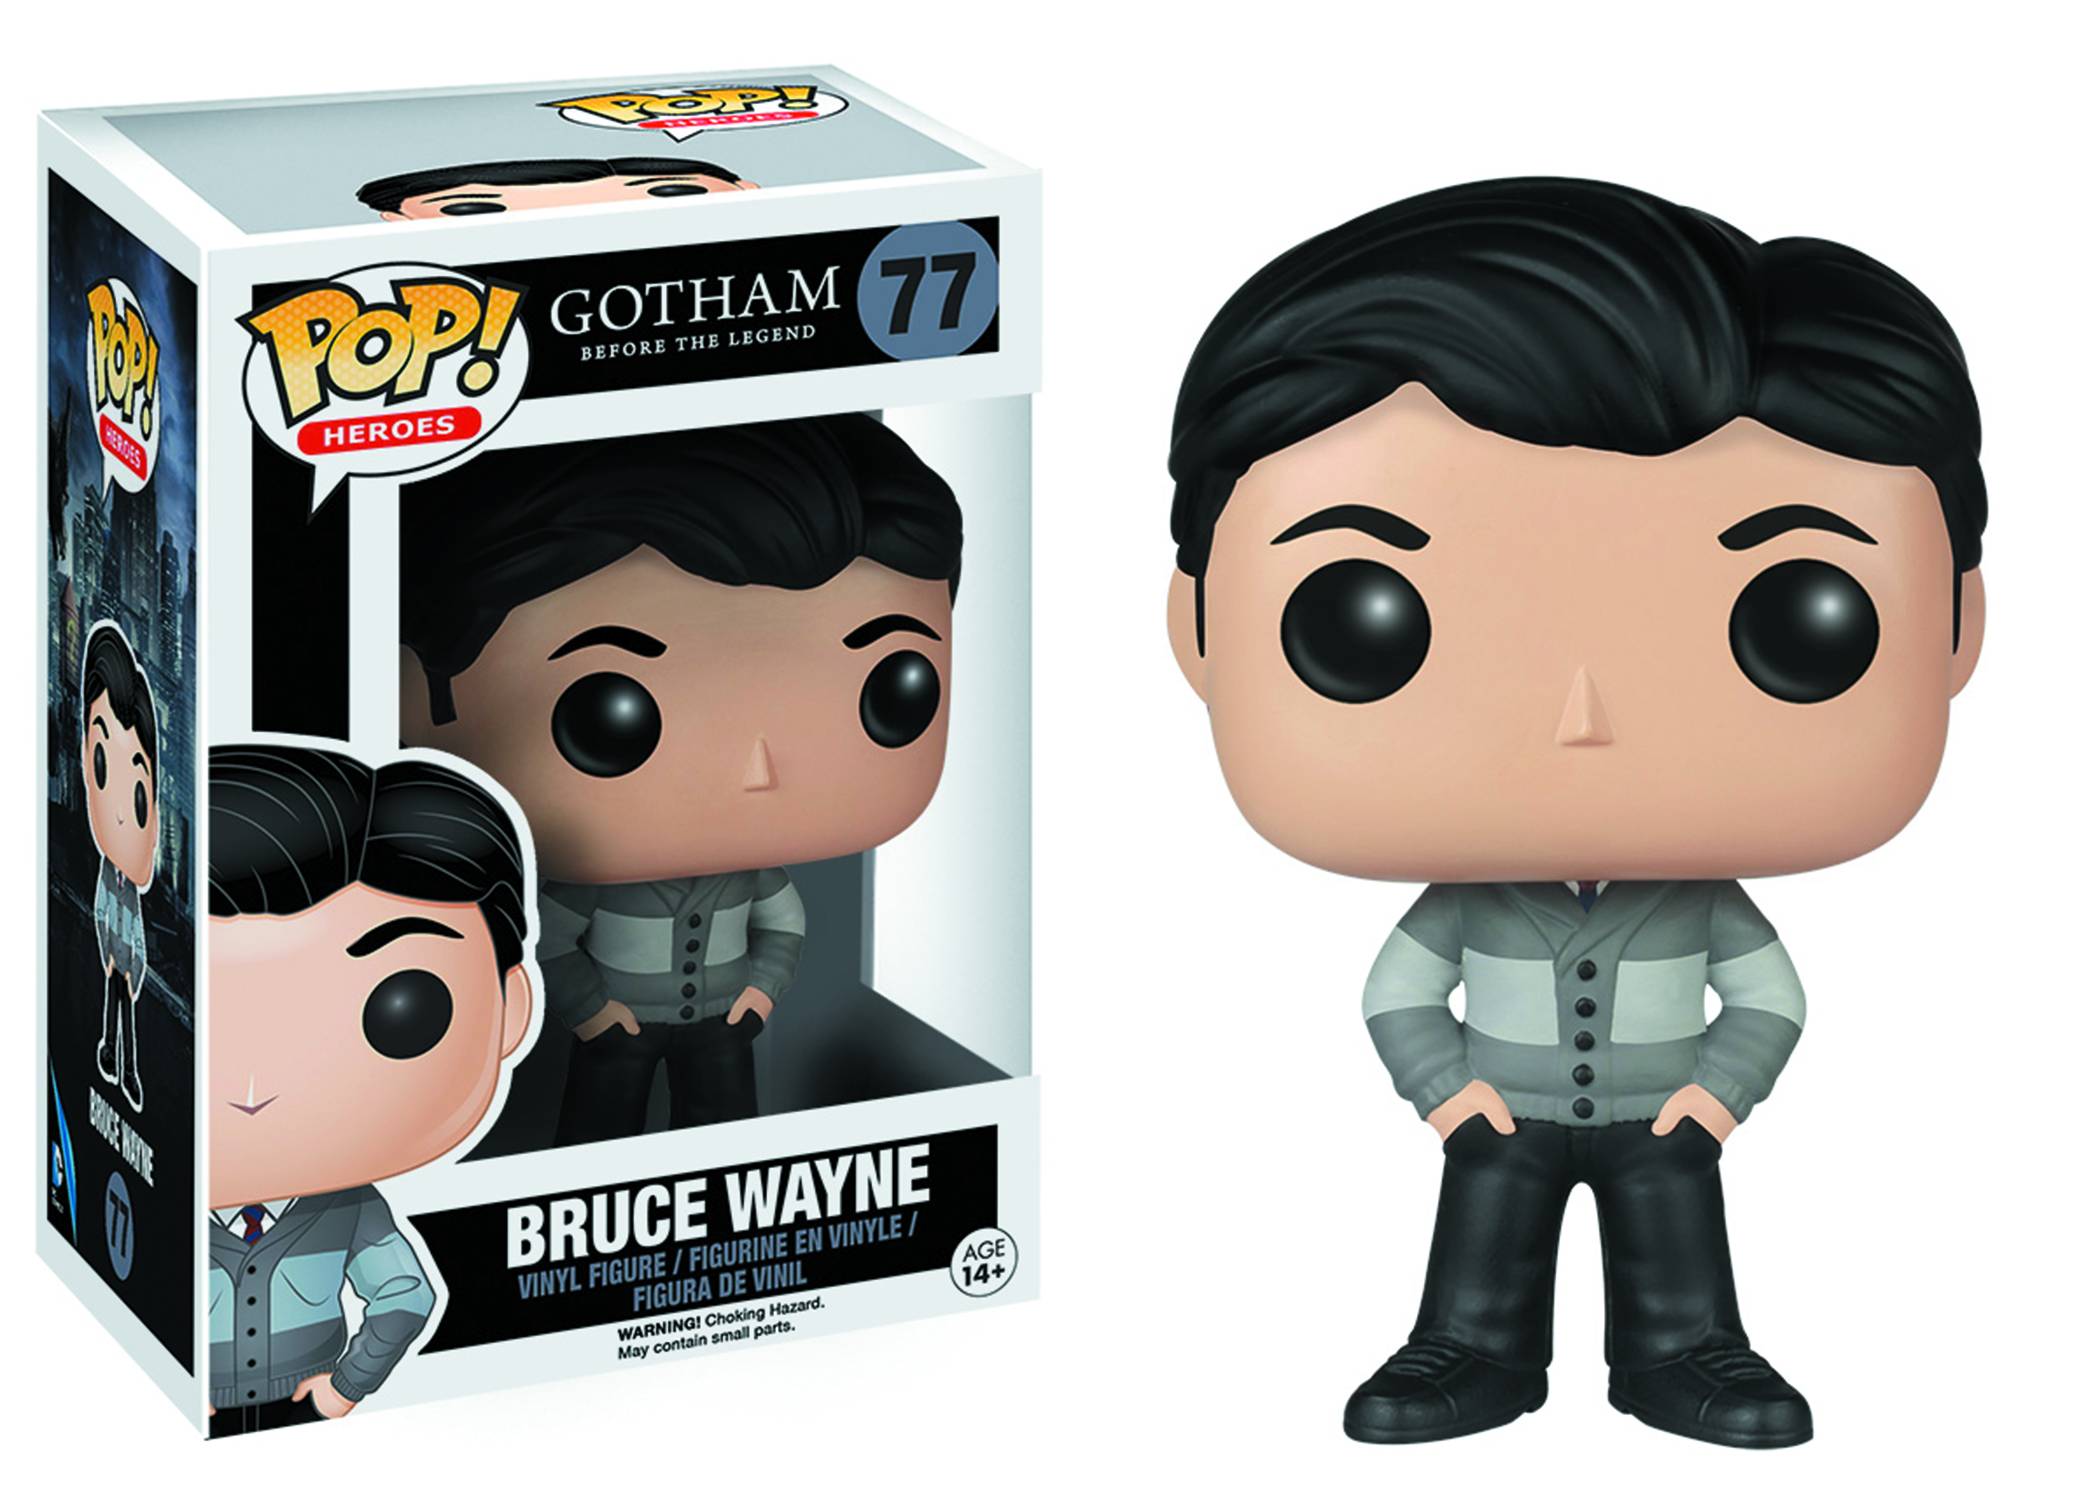 Pop Gotham Bruce Wayne Vinyl Figure